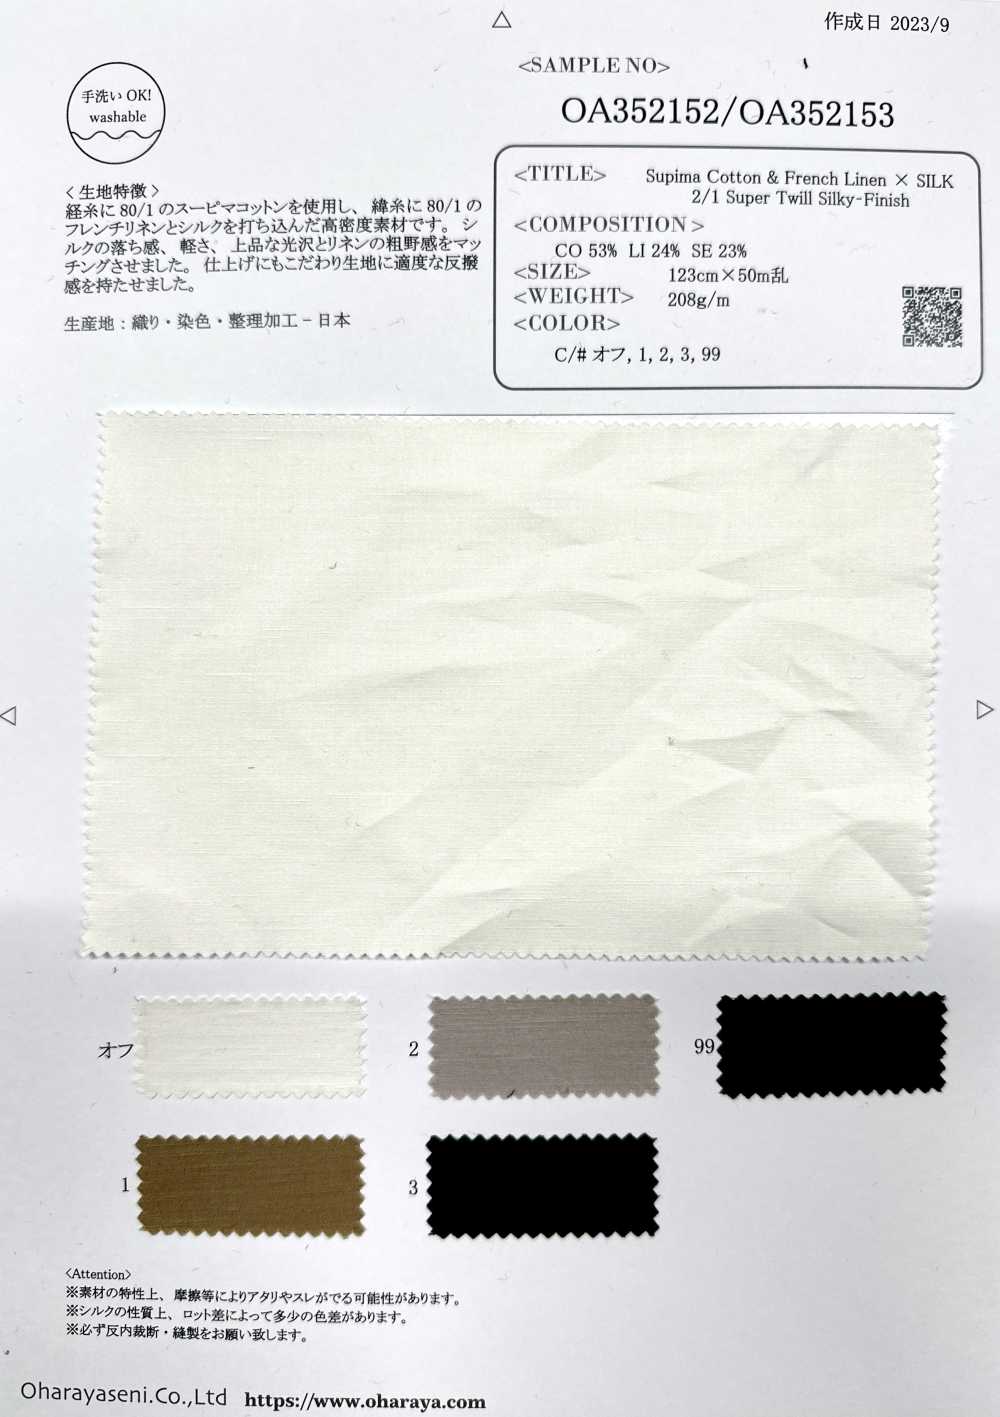 OA352153 Supima Cotton & French Linen × SILK 2/1 Super Twill Silky-Finish[Textile / Fabric] Oharayaseni